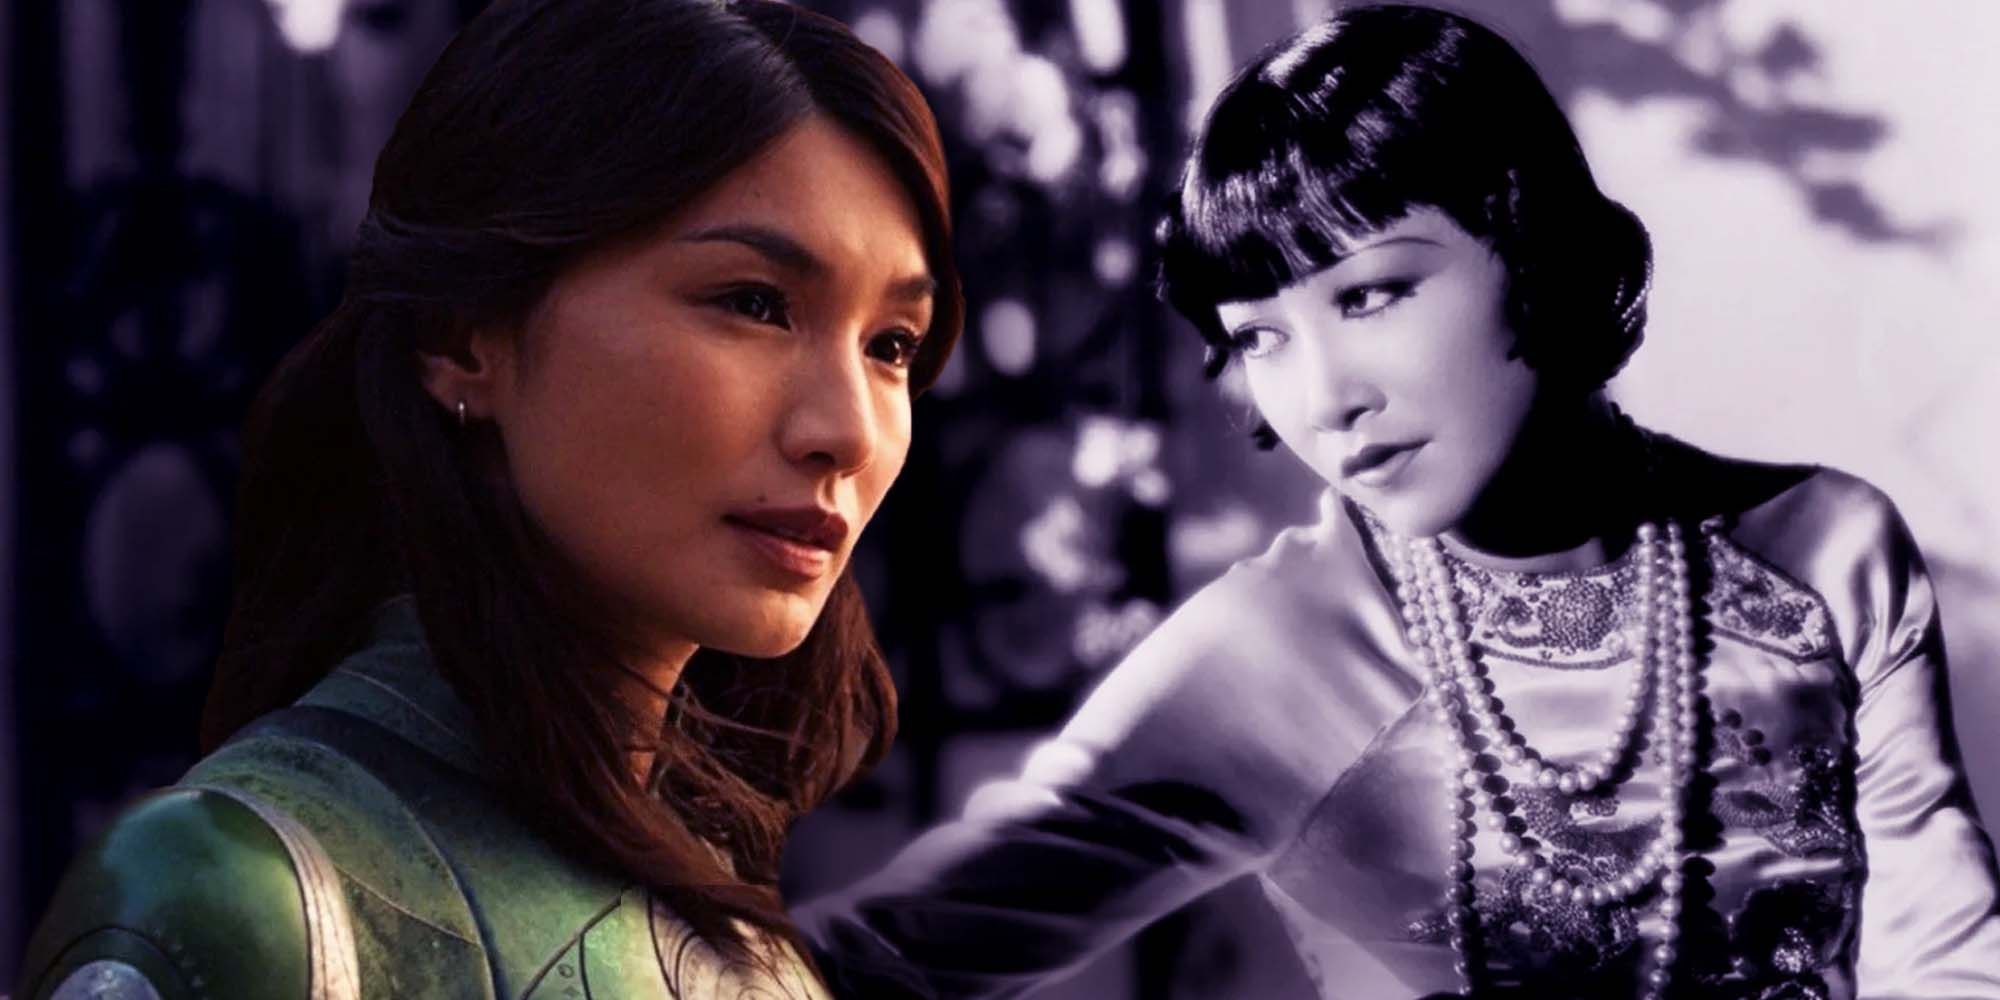 La estrella de Eternals Gemma Chan protagonizará la película biográfica de Anna May Wong